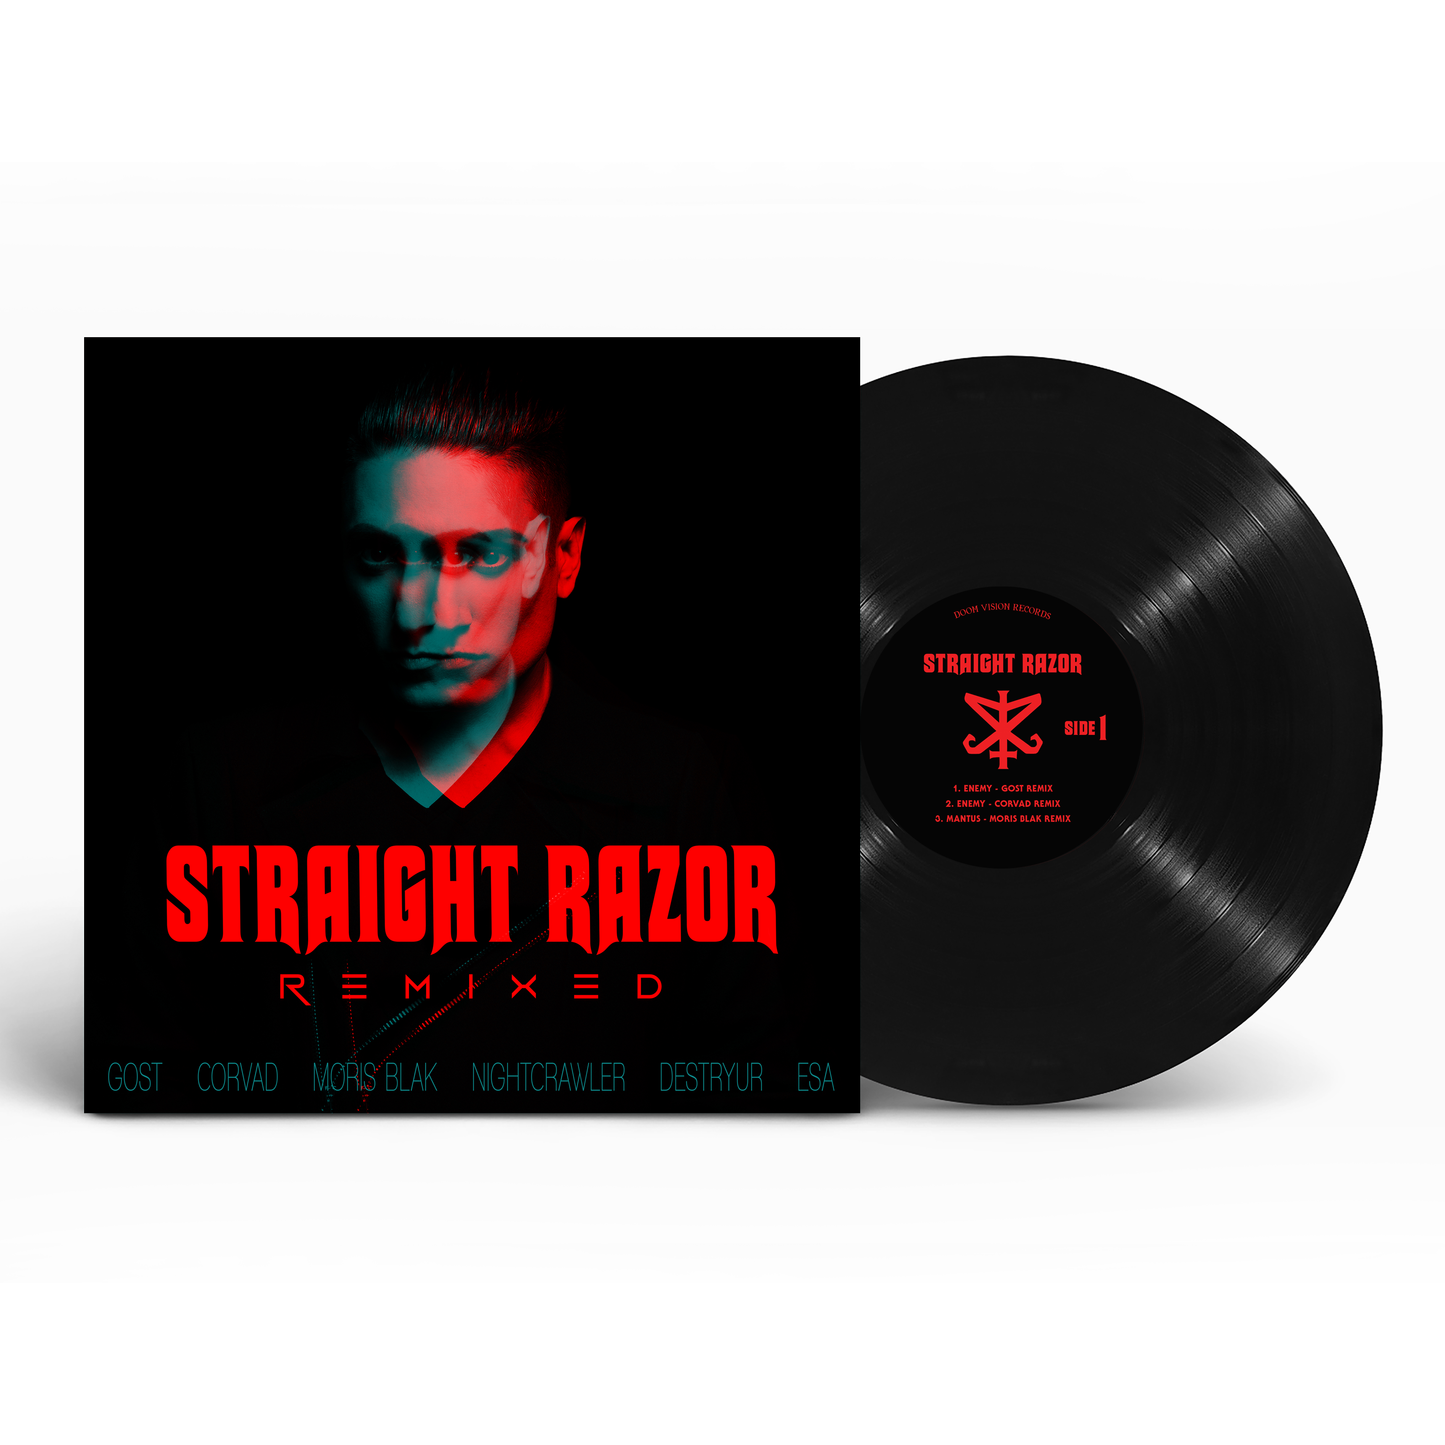 Vinyl - Straight Razor Remixed PRE-ORDER